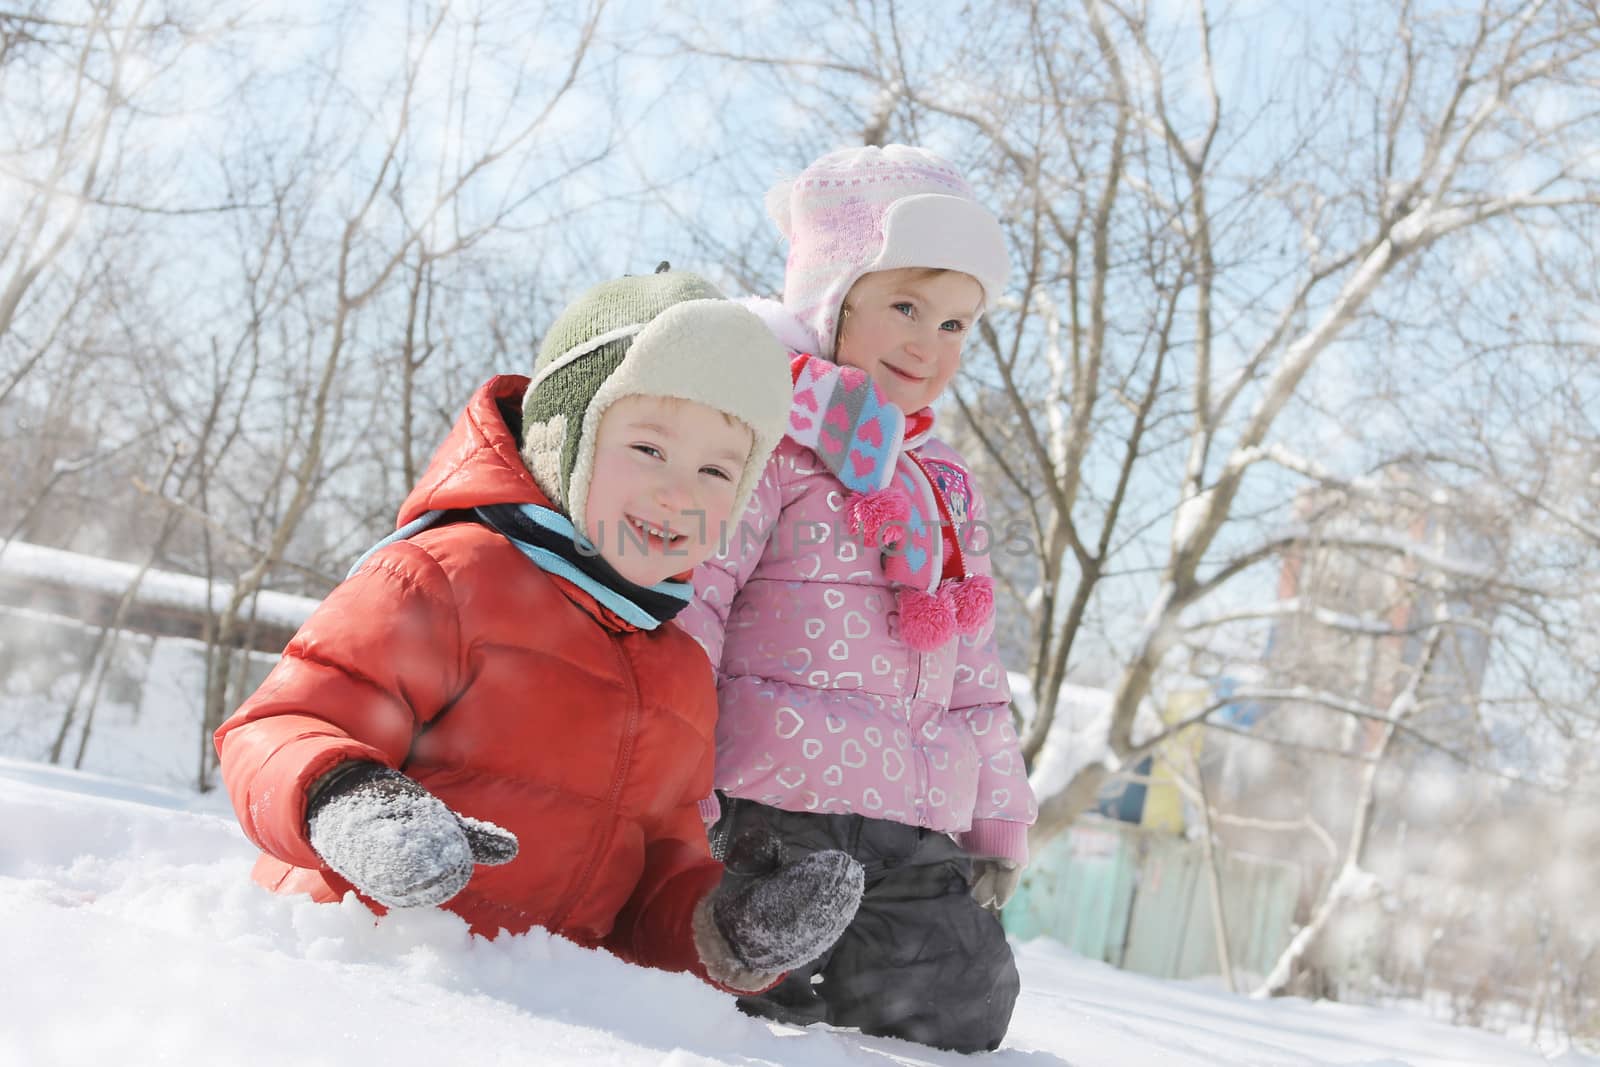 Children having fun in snow by Angel_a